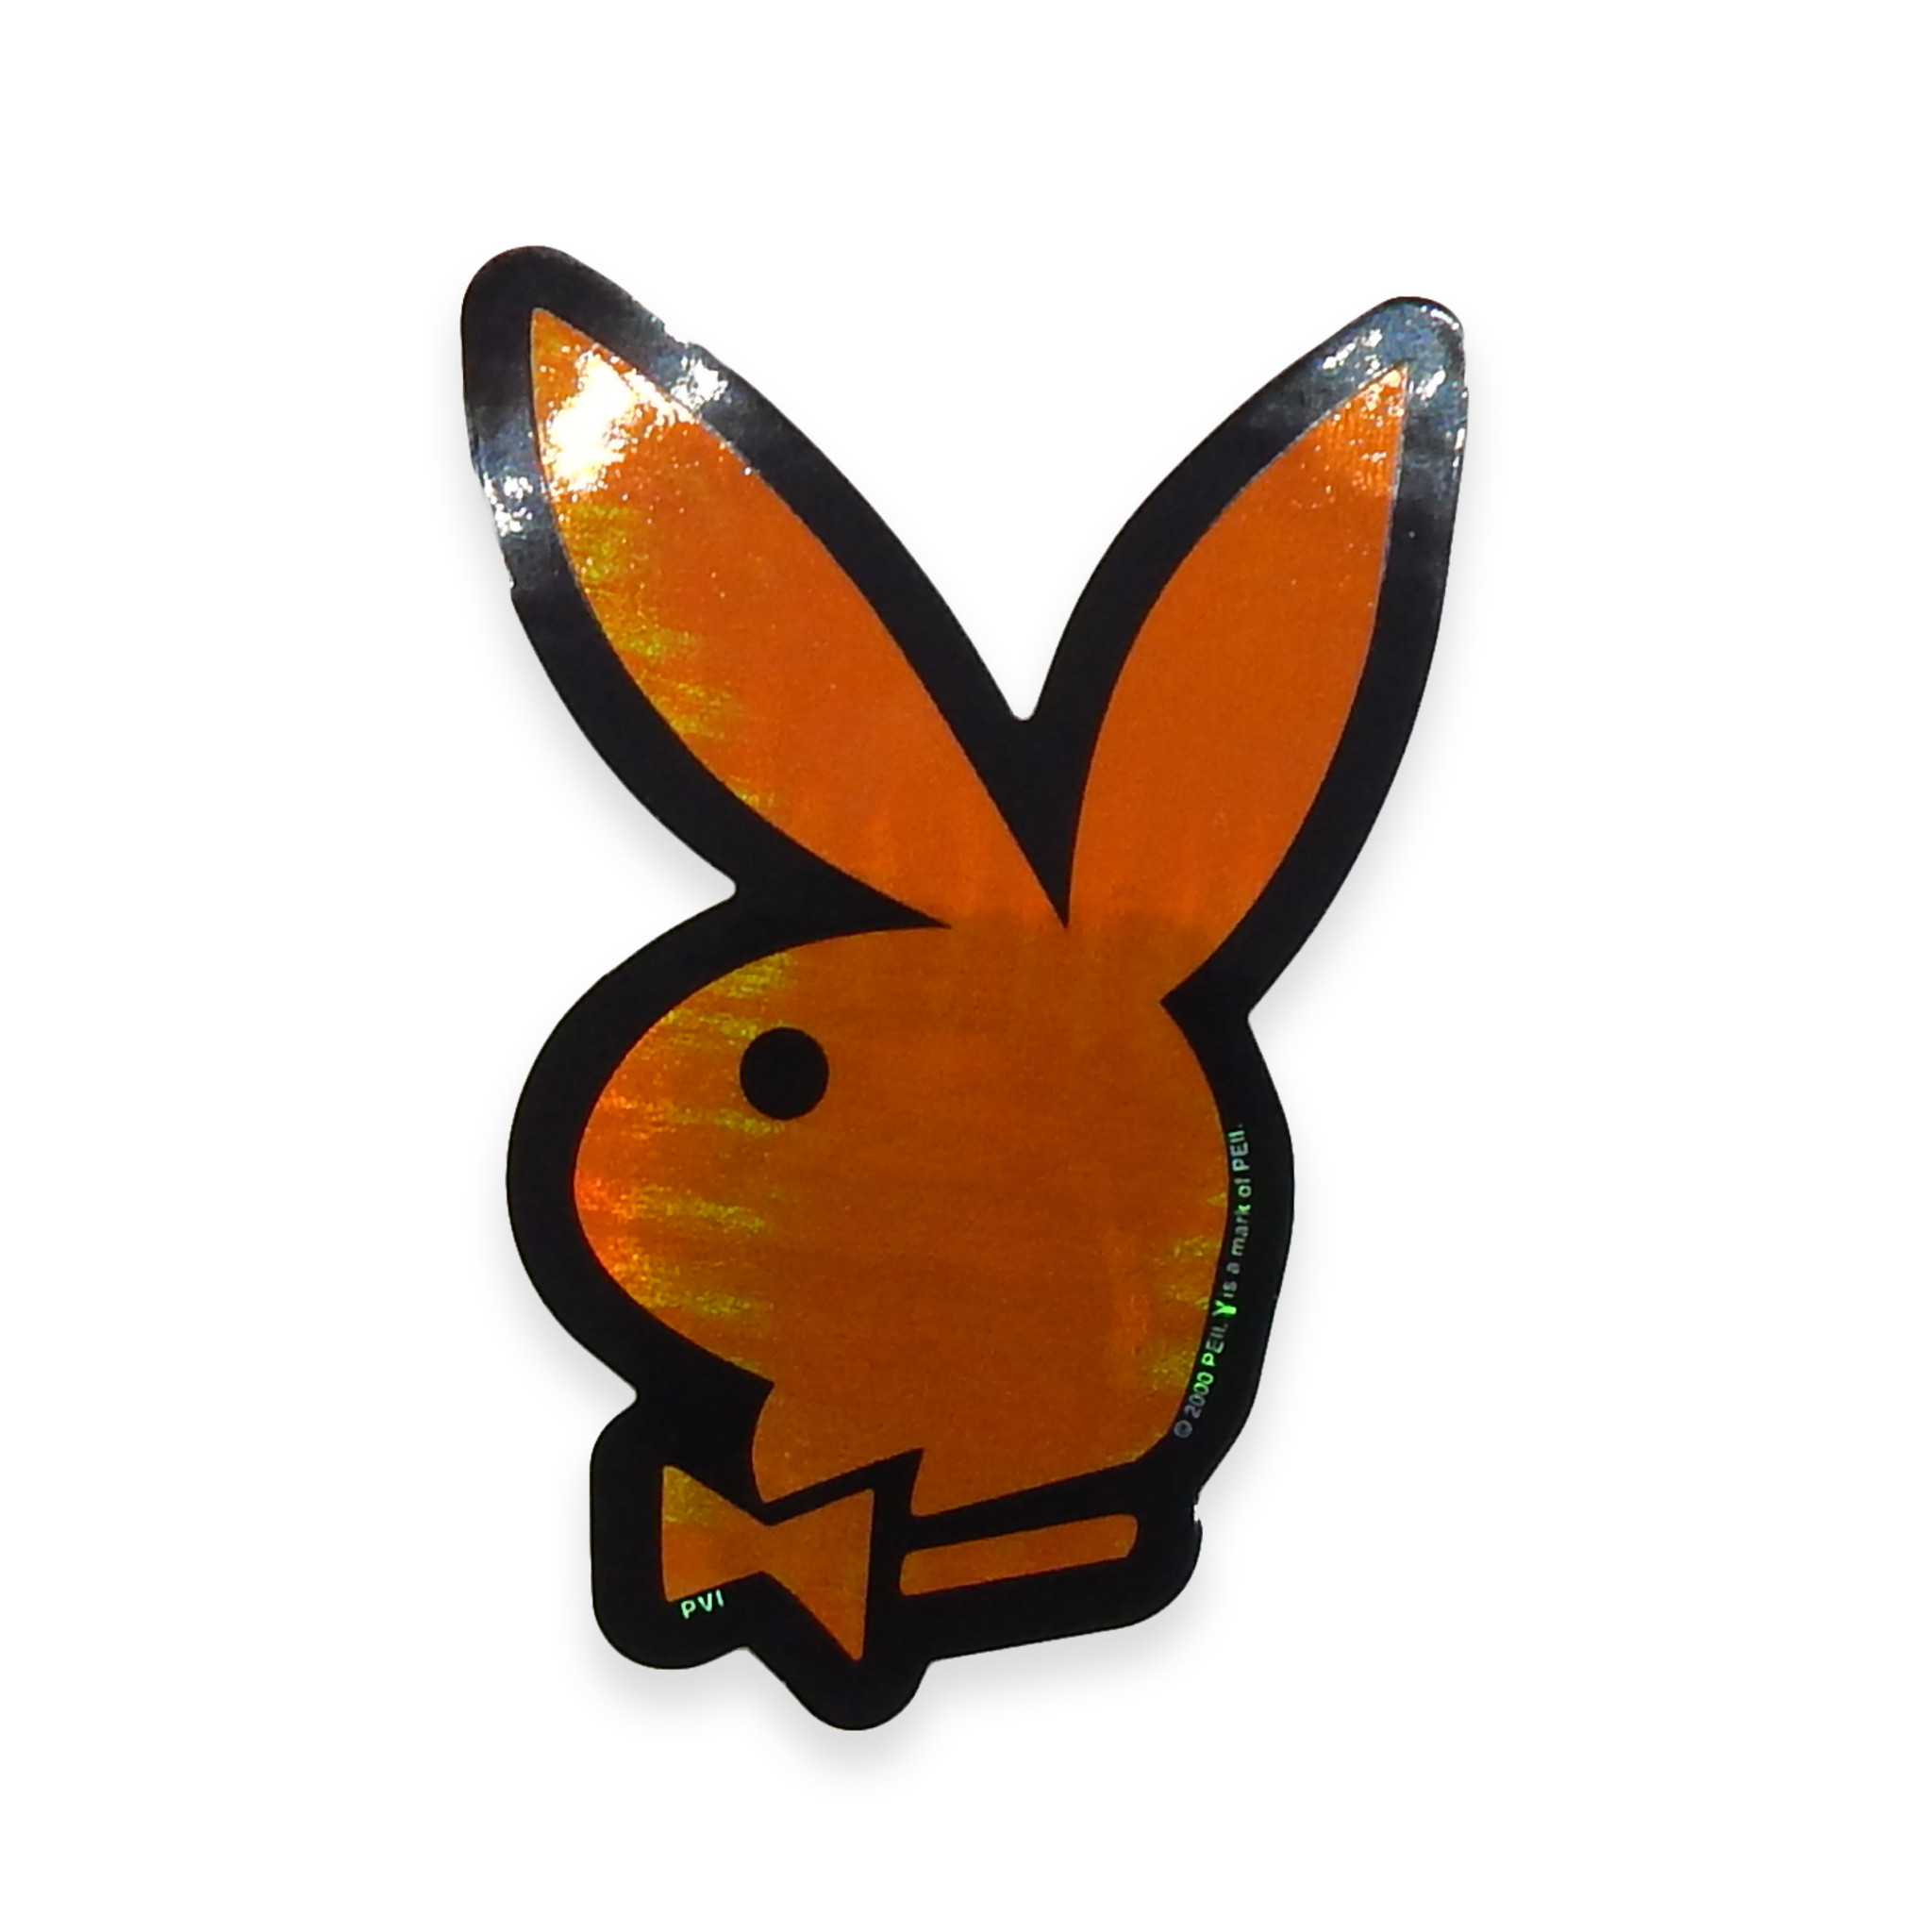 PLAYBOY bunny, PLAYBOY logo - rabbit icon, PLAYBOY magazine vinyl decal  sticker